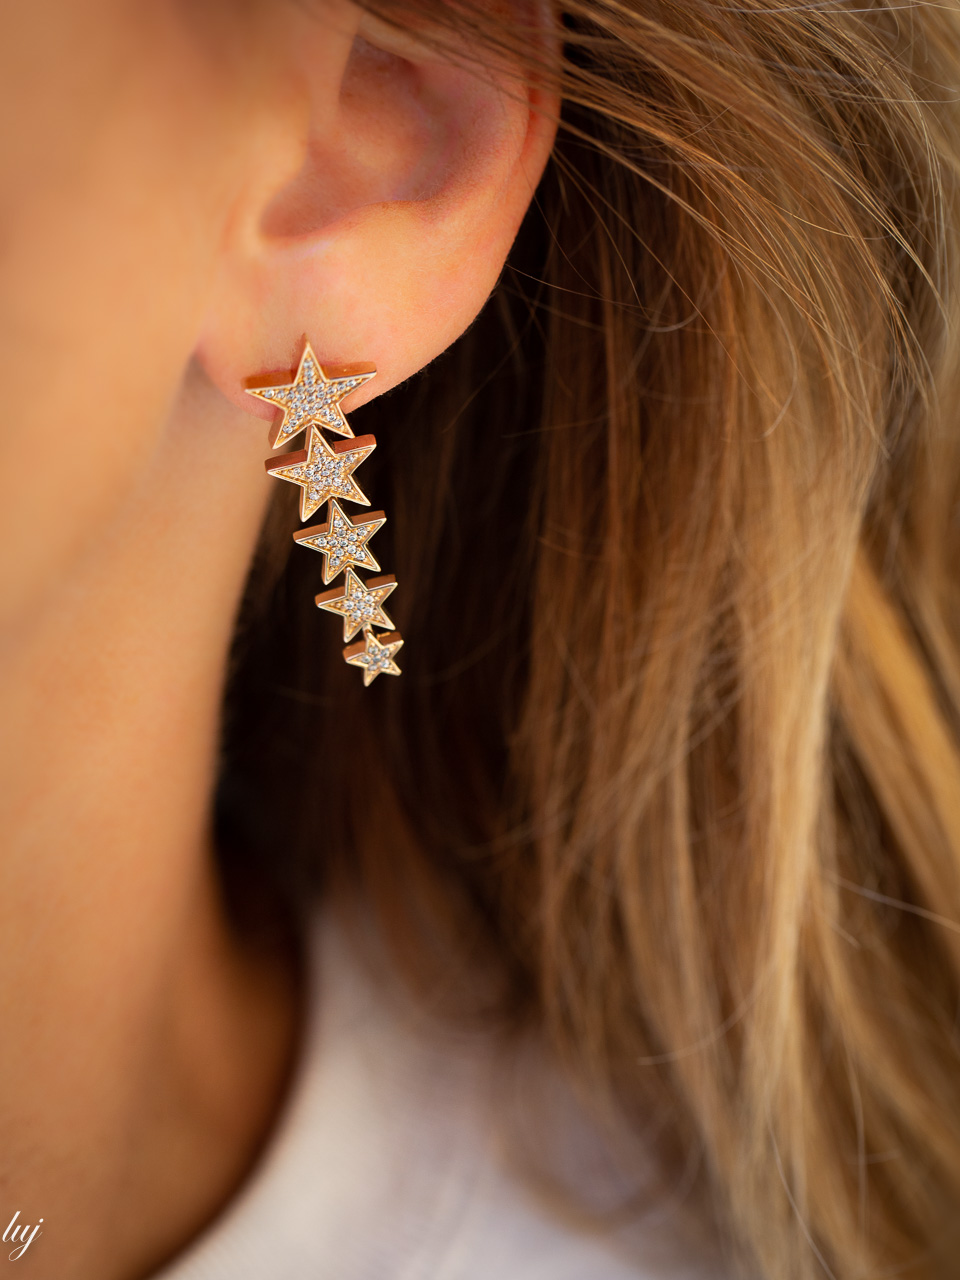 rita-sparkling-shooting-stars-earrings-luj-paris-jewels